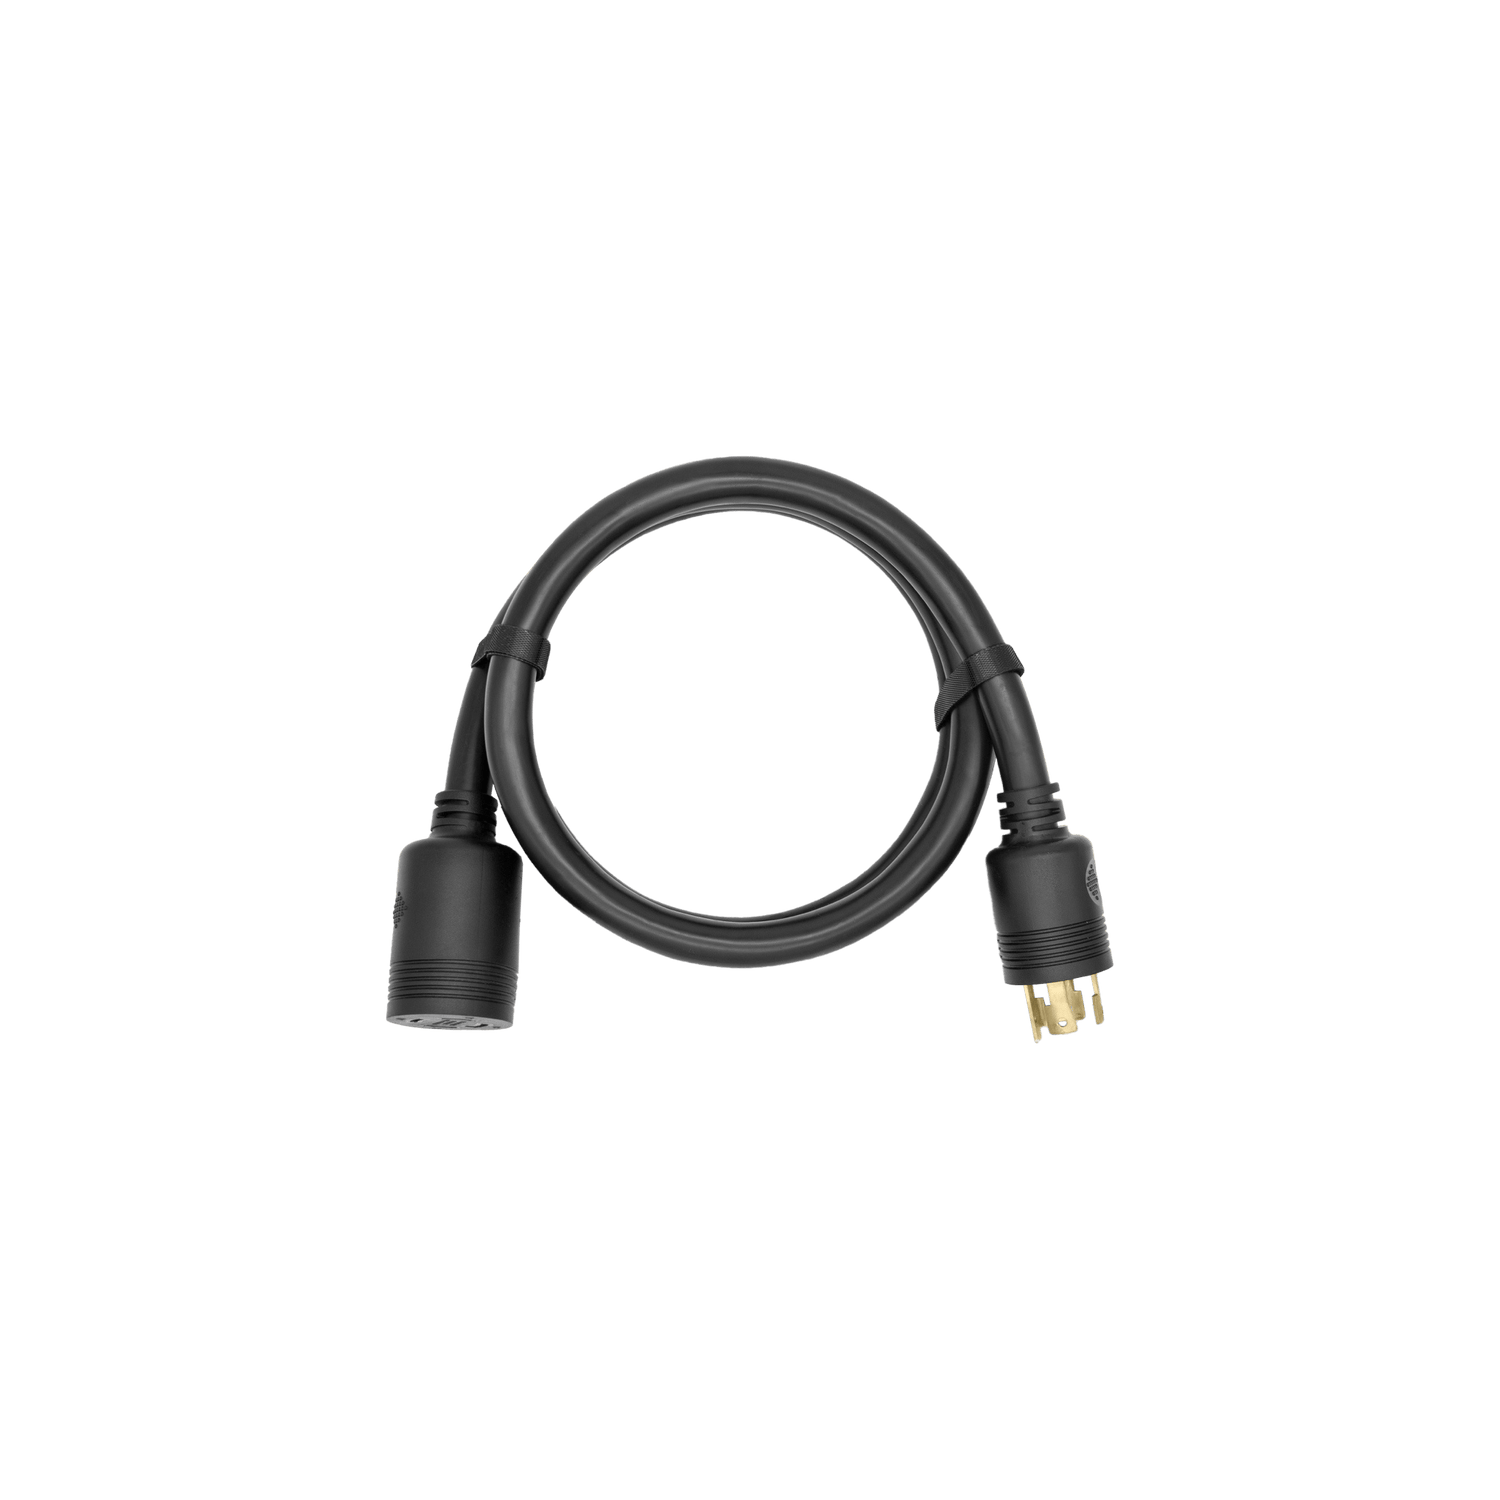 EcoFlow Delta Pro - Inlet Box Cable